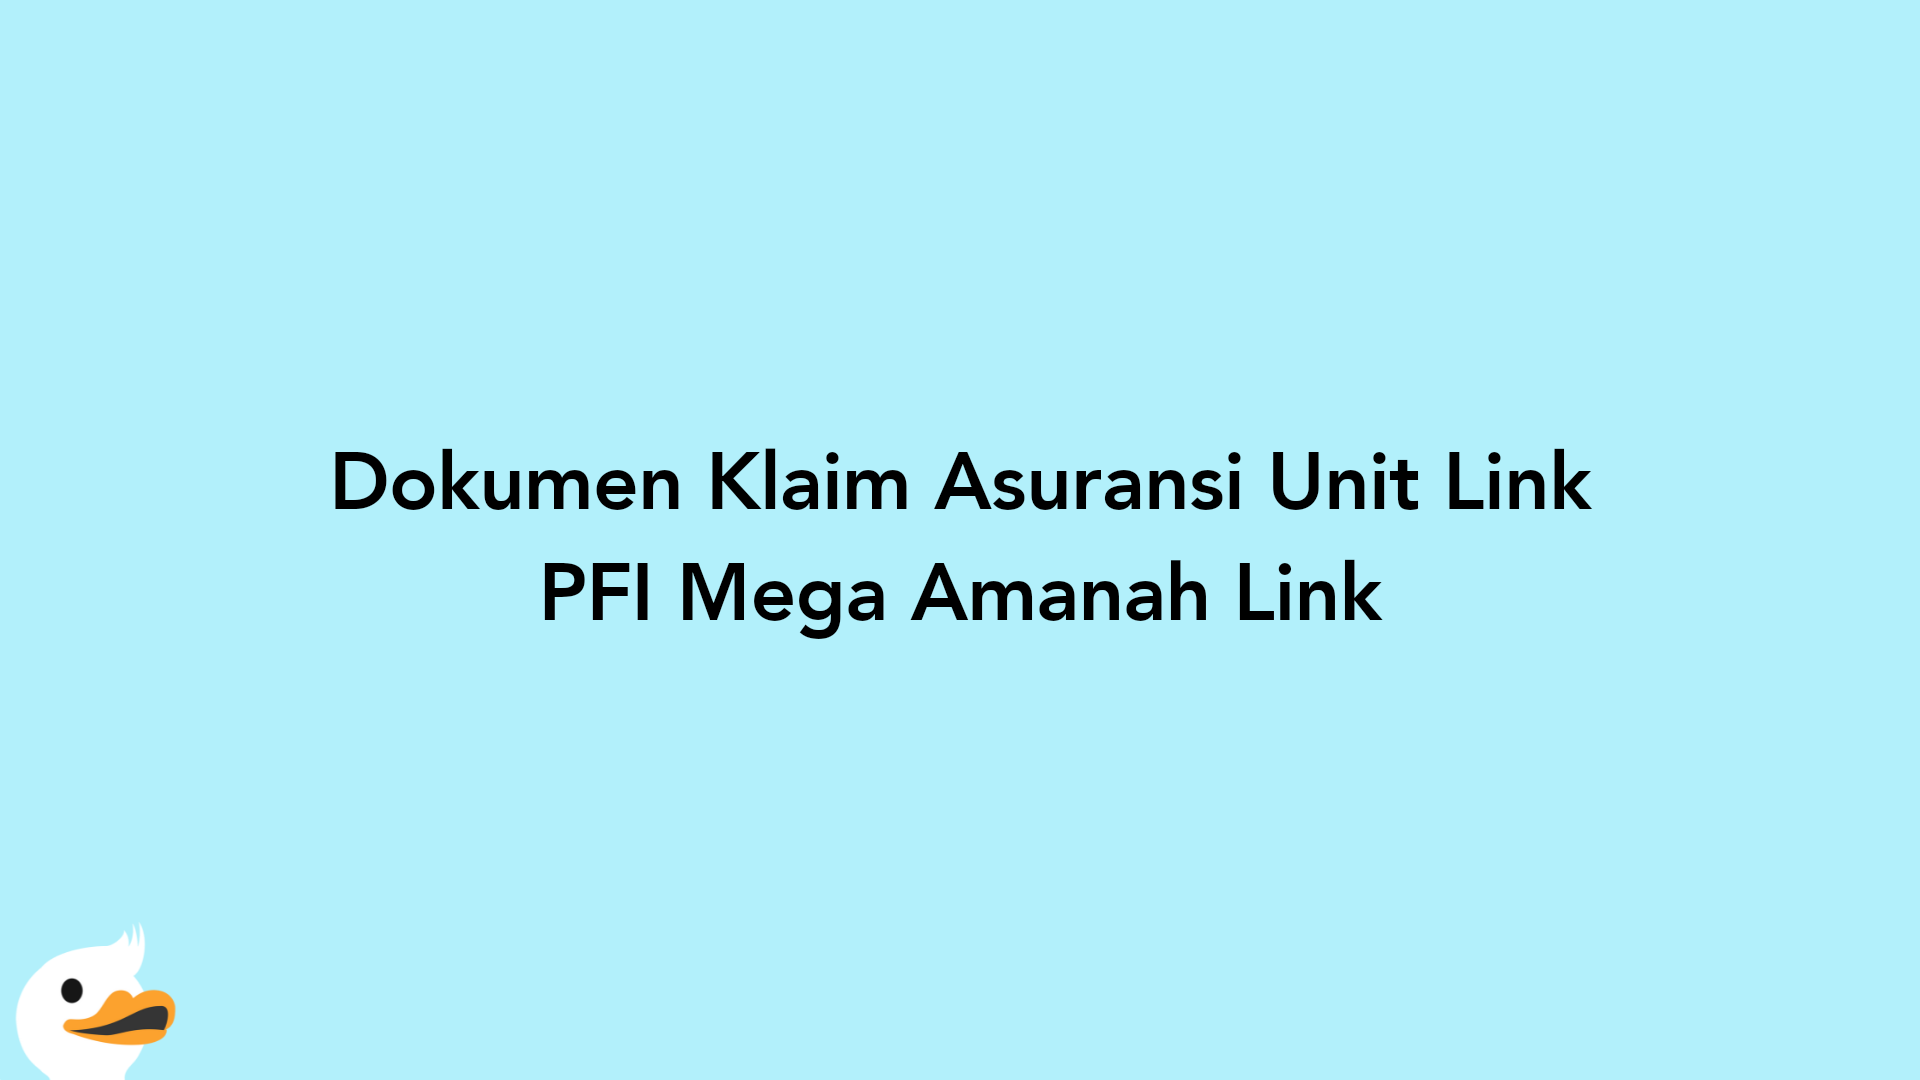 Dokumen Klaim Asuransi Unit Link PFI Mega Amanah Link